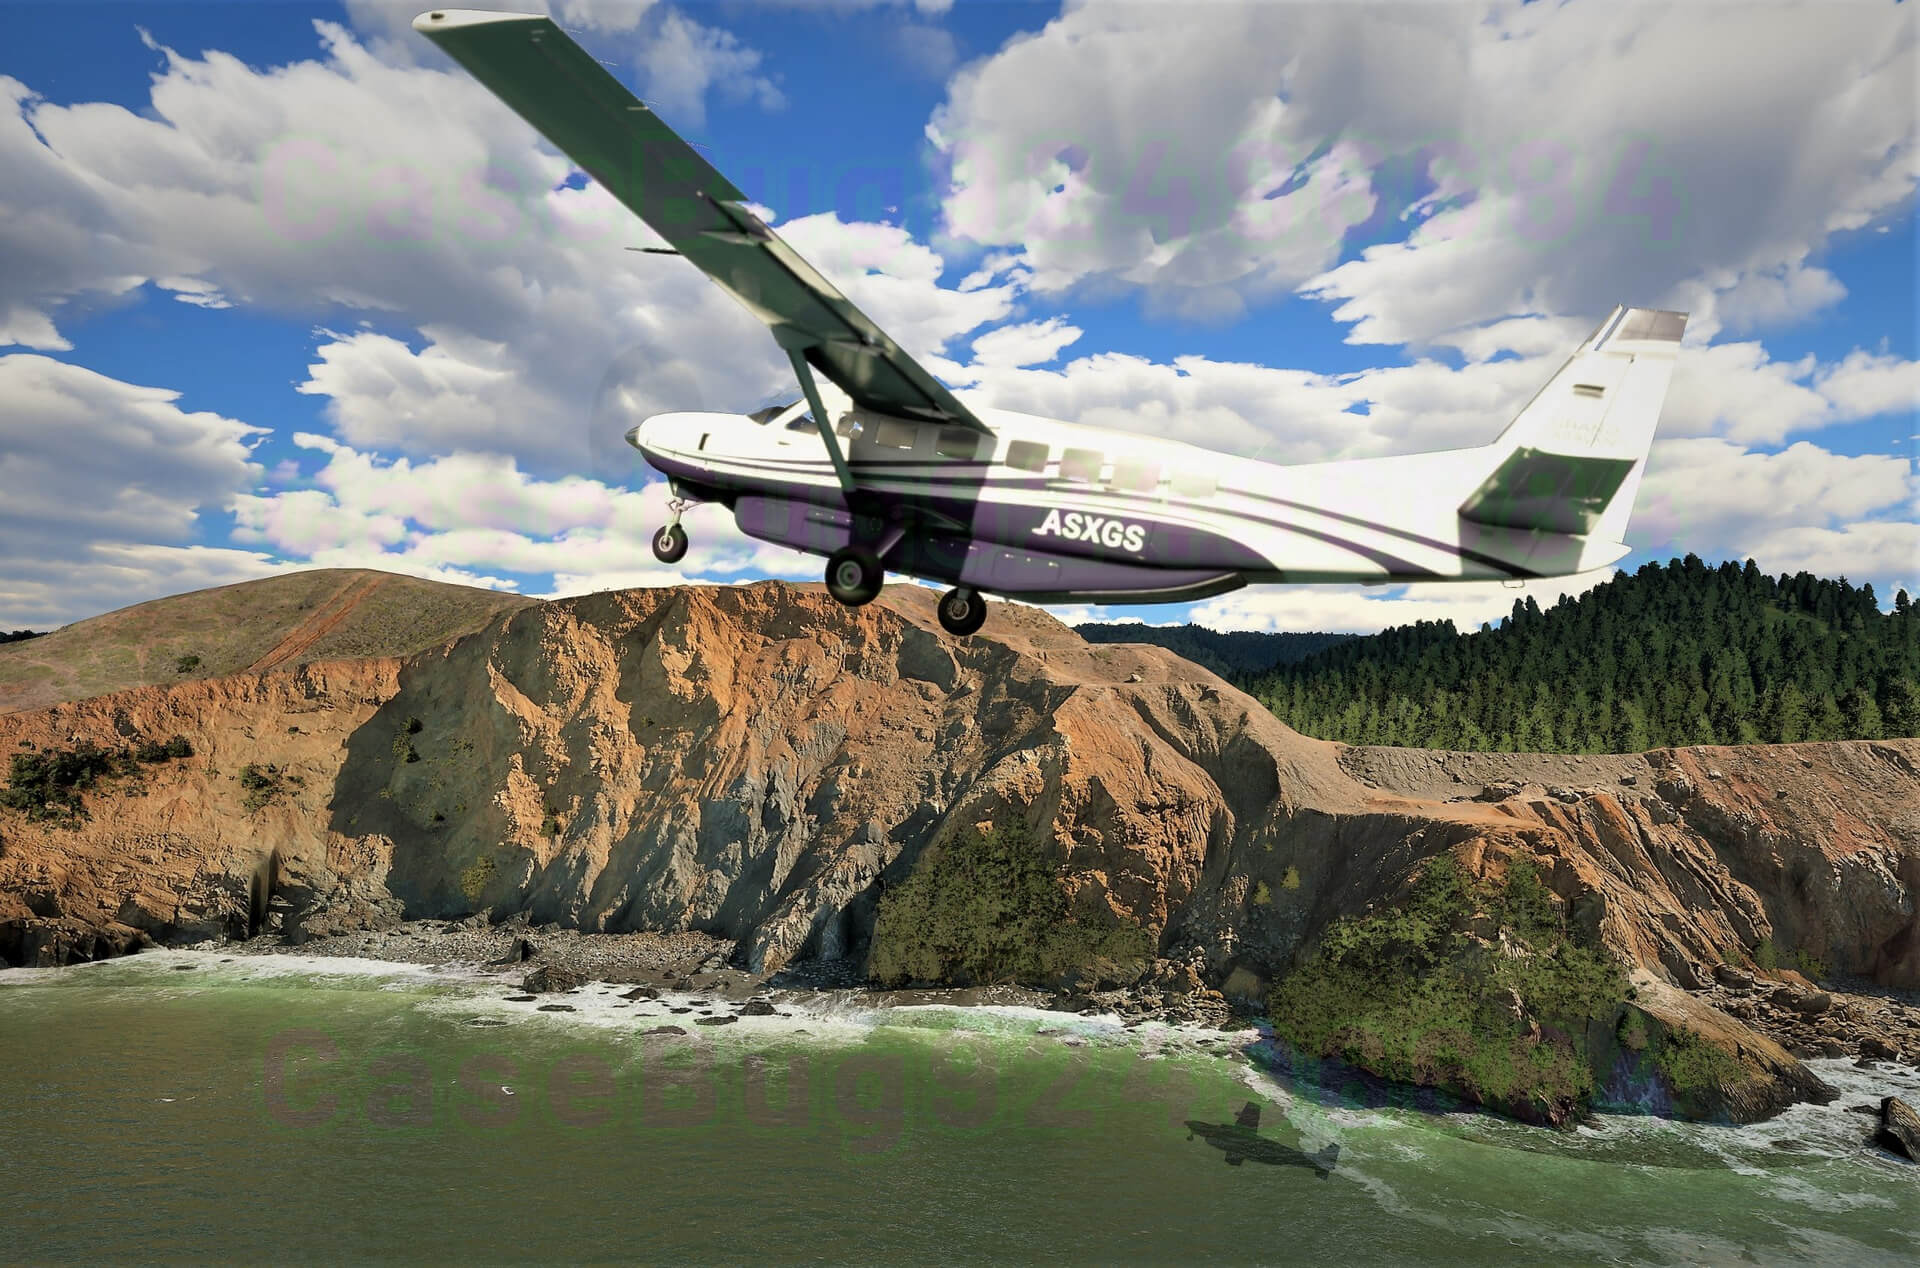 Microsoft Flight Simulator - The next generation of one of the